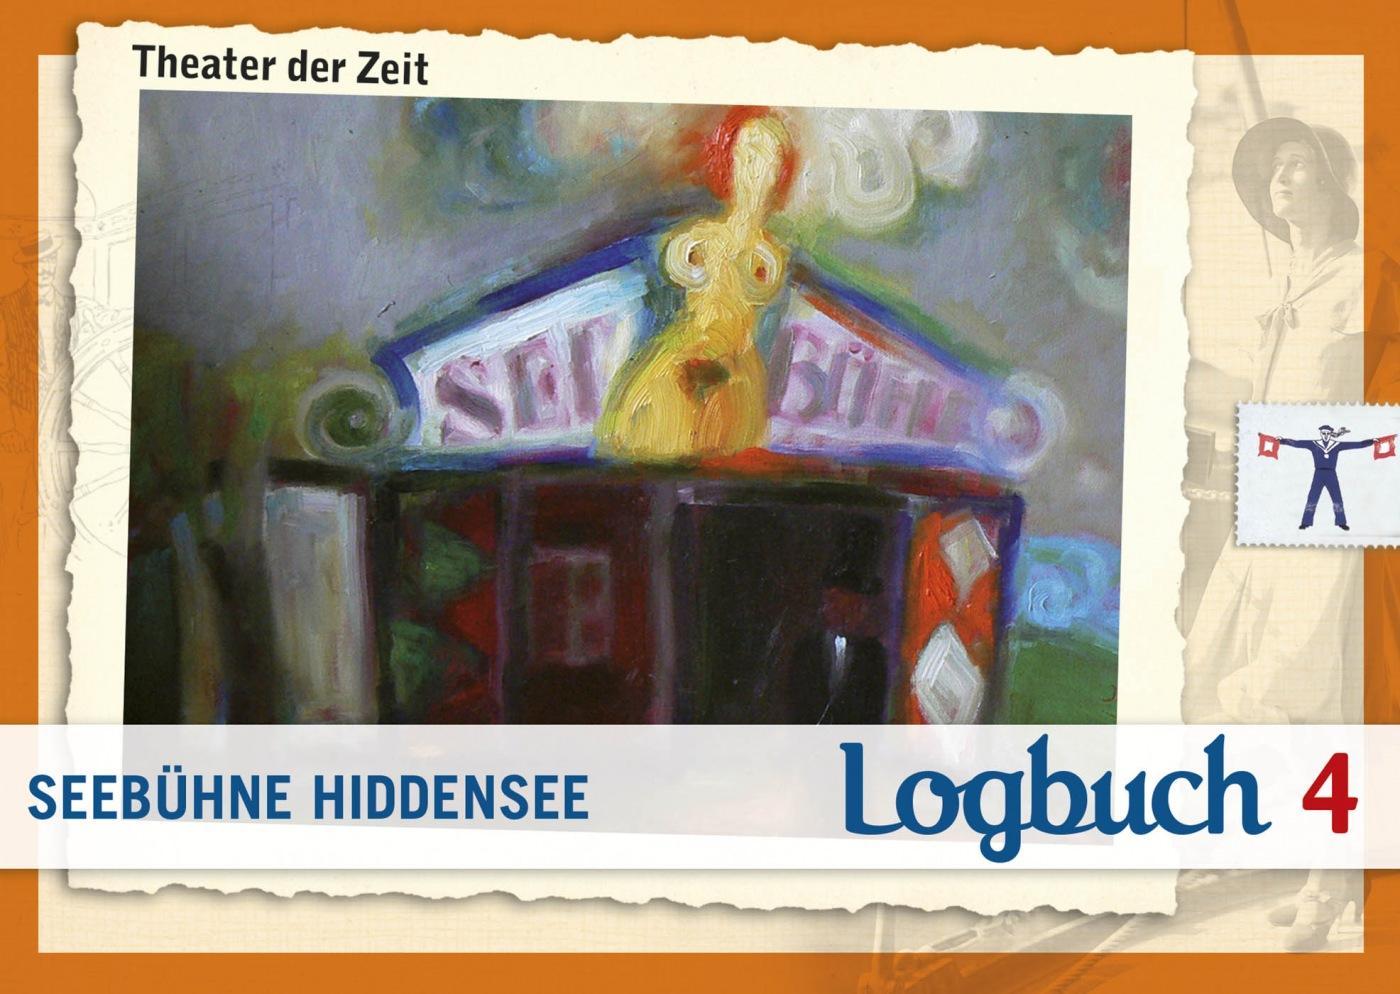 "Seebühne Hiddensee - Logbuch 4"